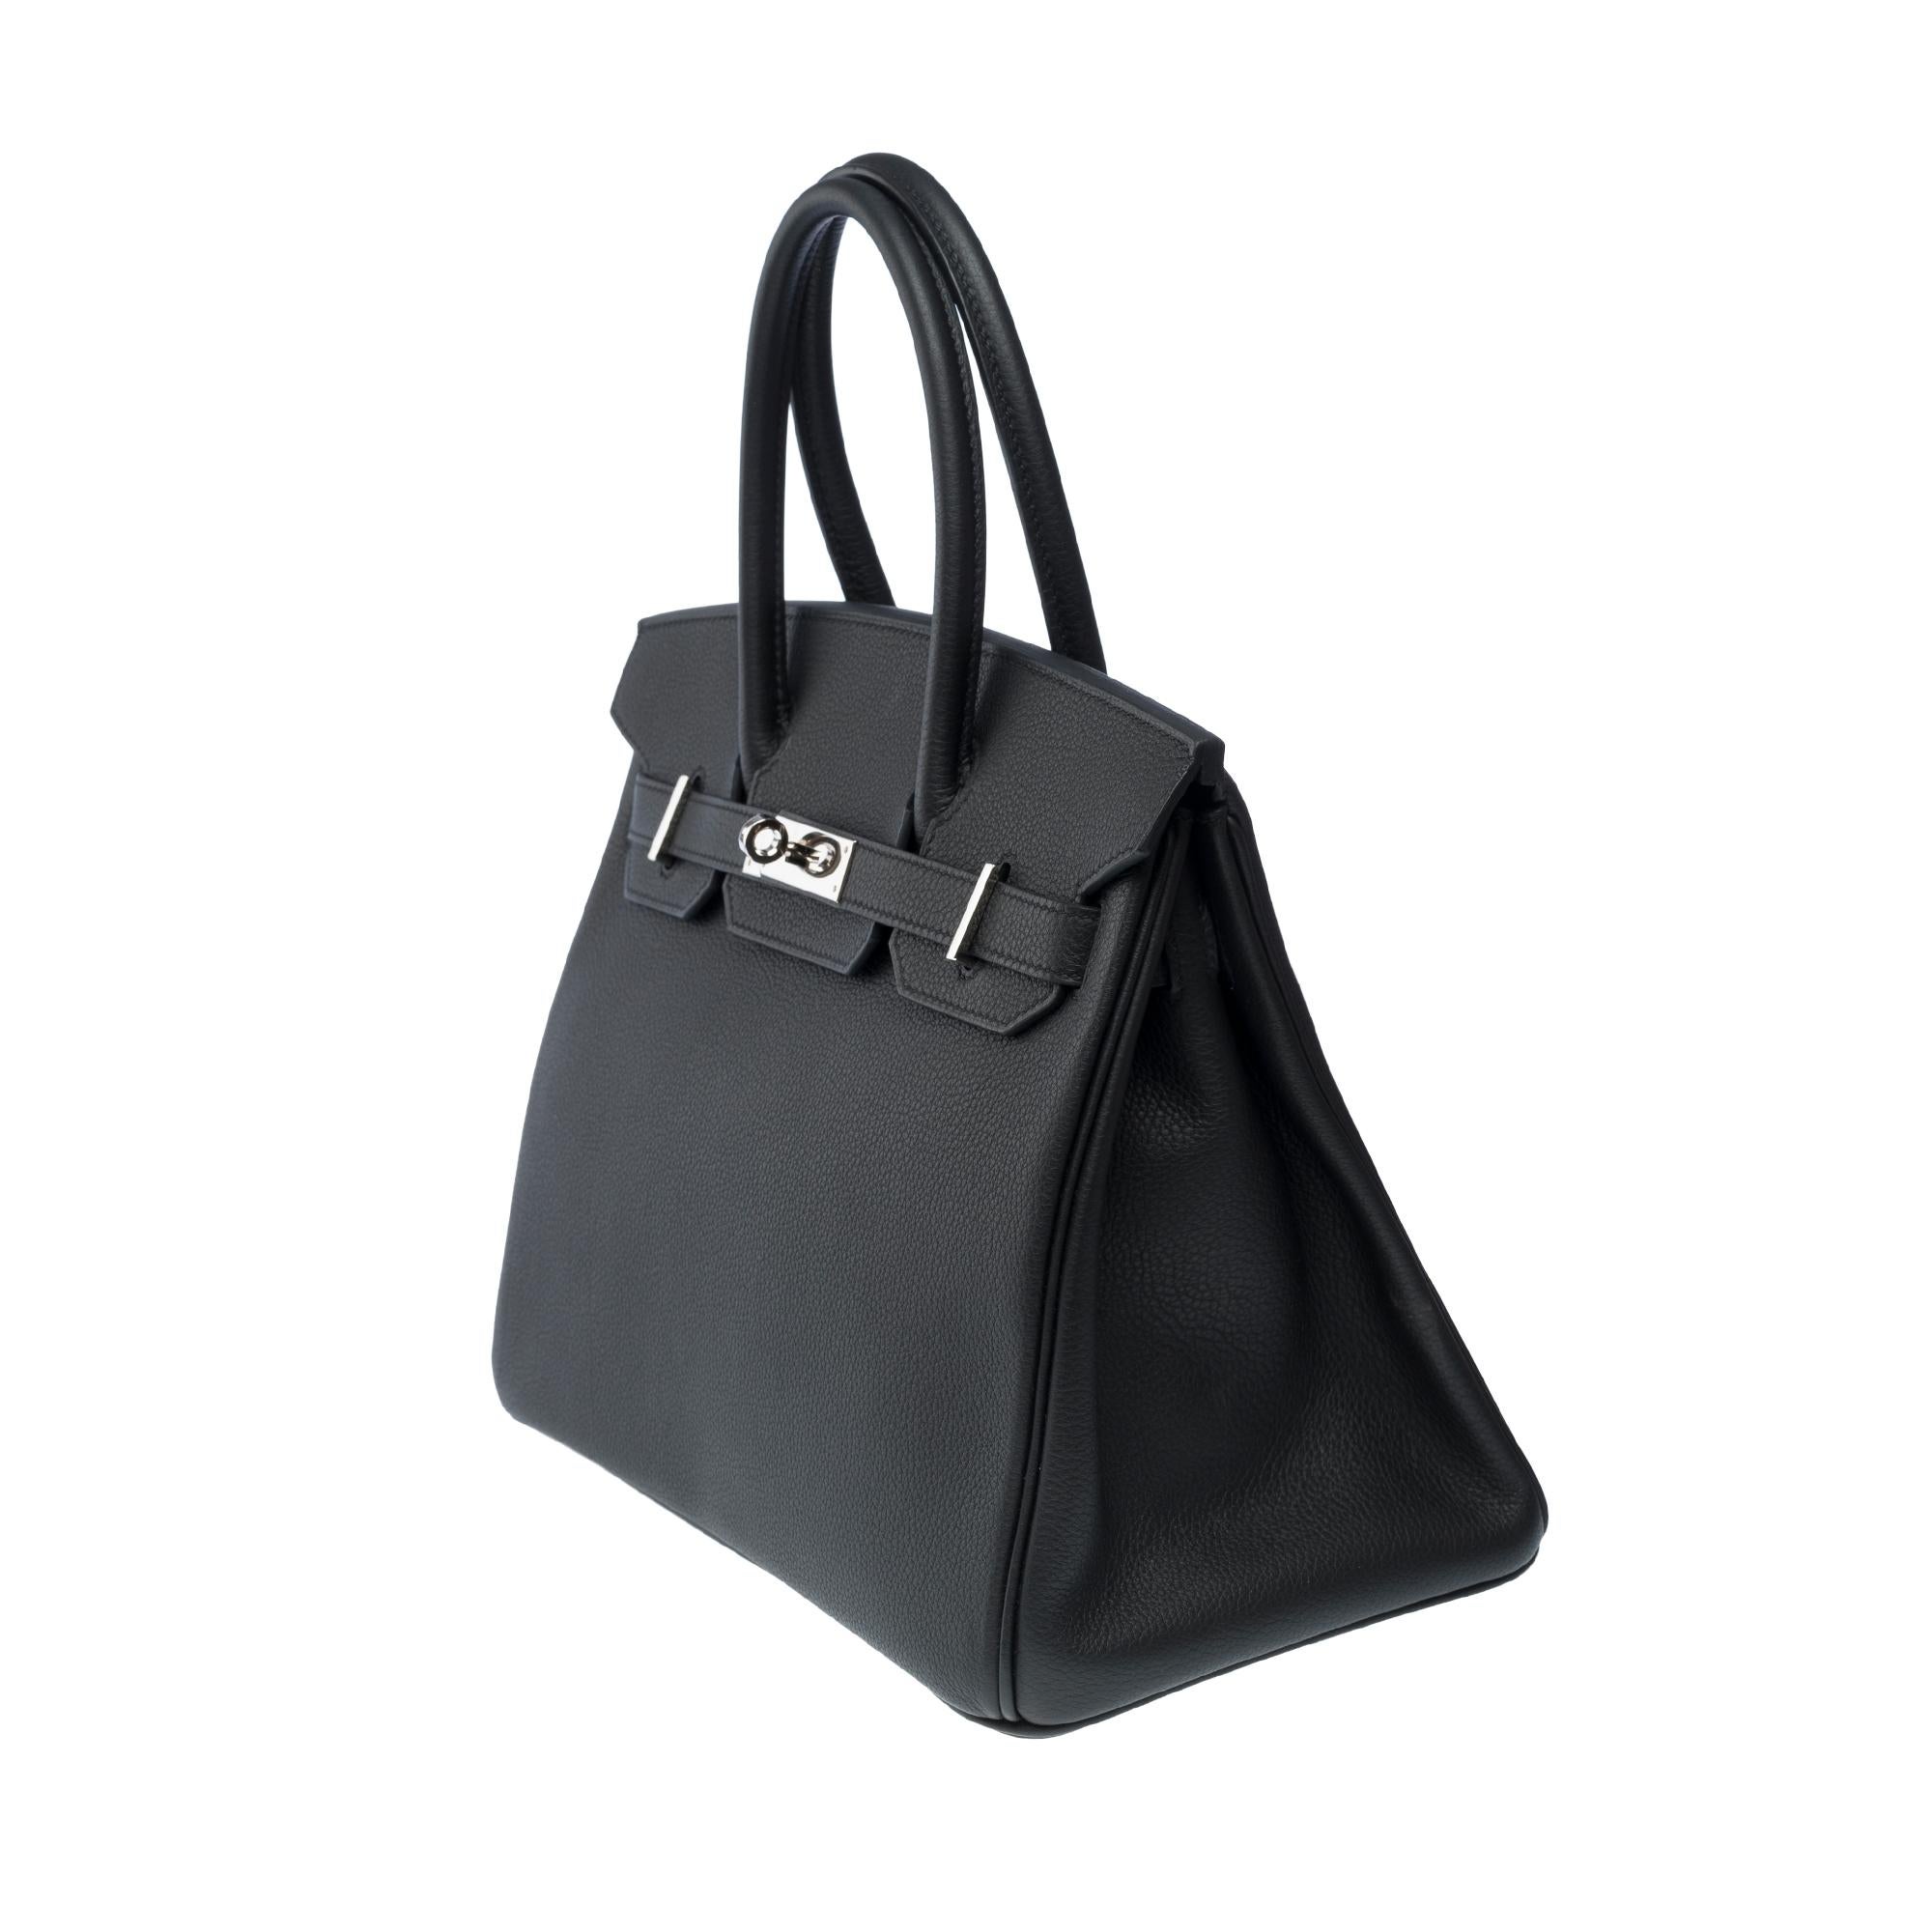 Women's Splendid Hermes Birkin 30 handbag in Black Togo leather, SHW For Sale